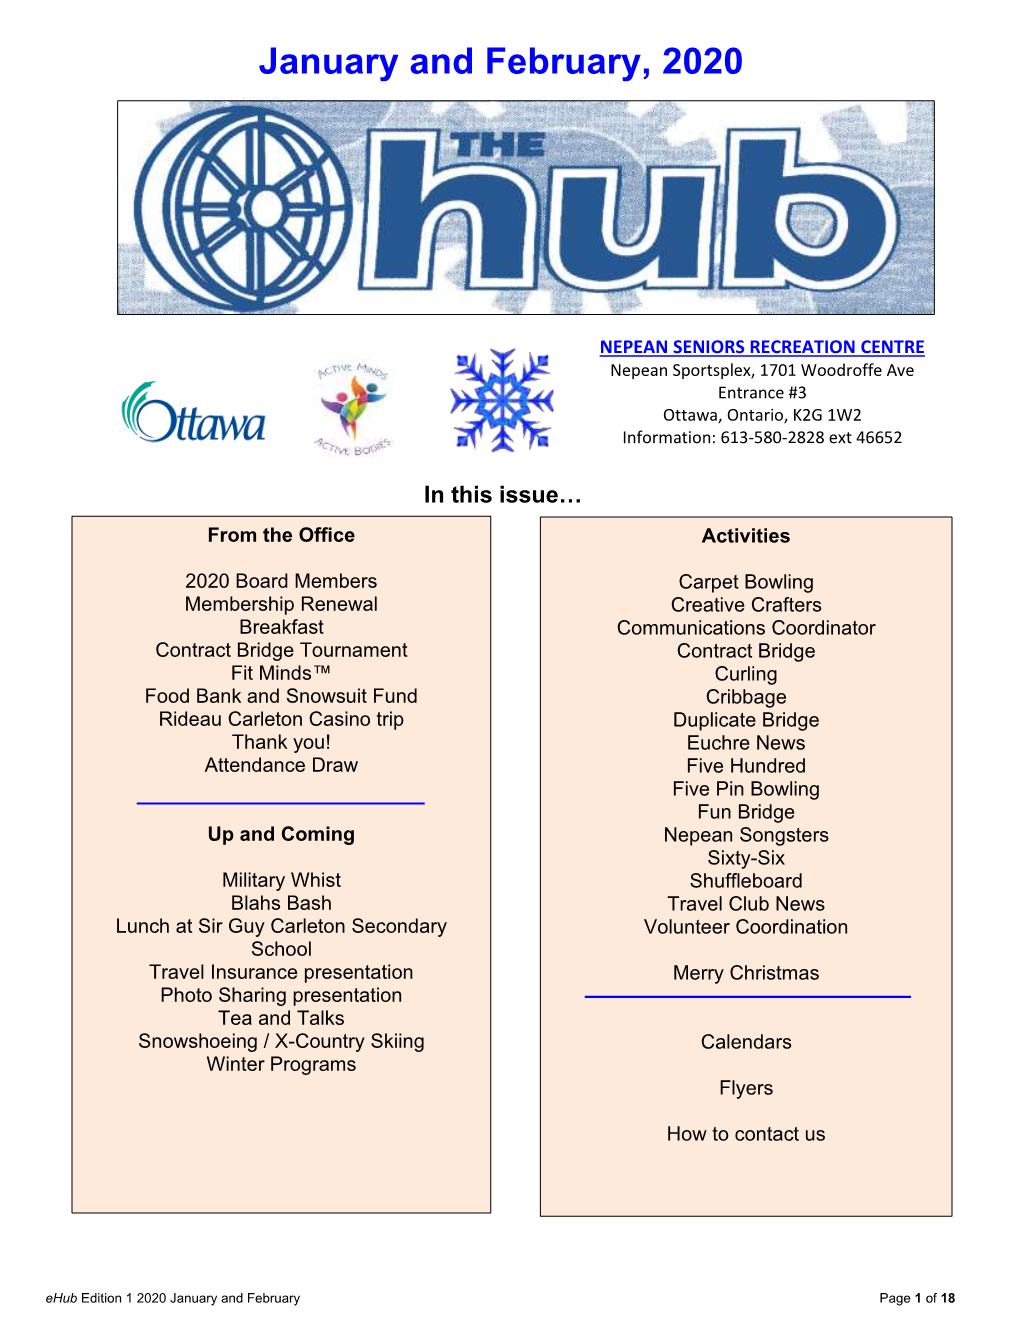 Ehub Newsletter January and February 2020